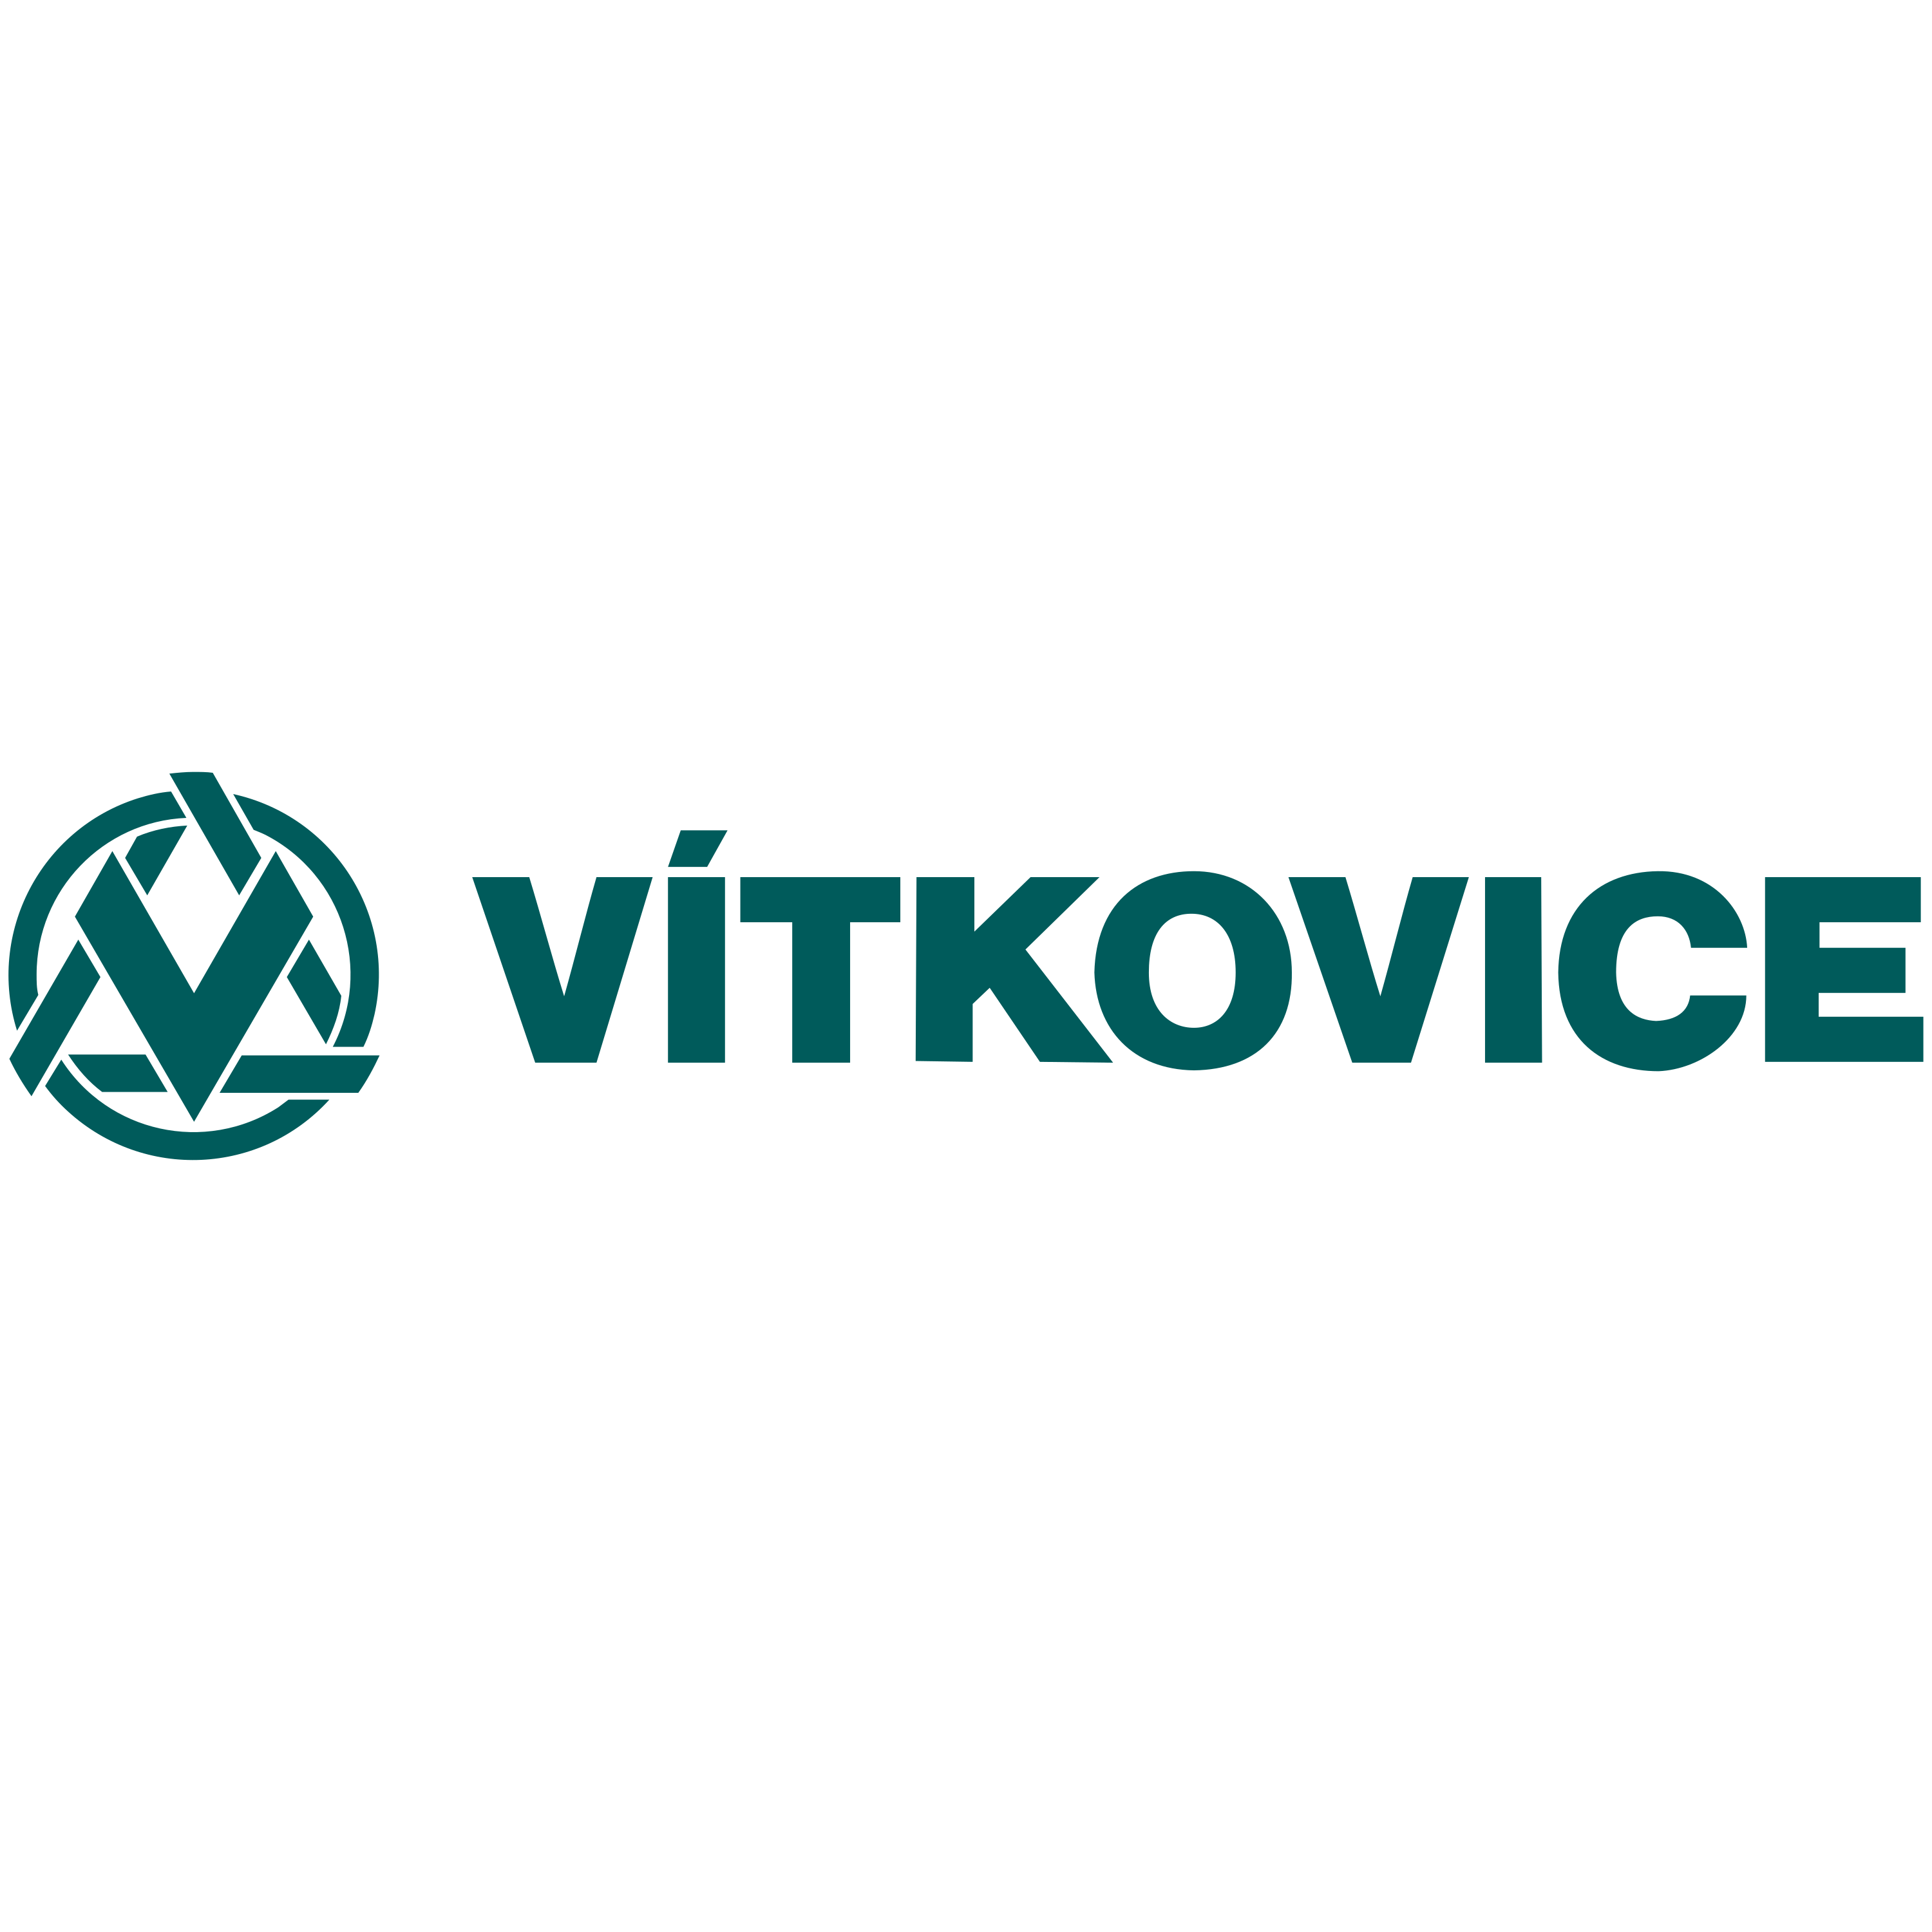 Vitkovice Logo  Transparent Gallery